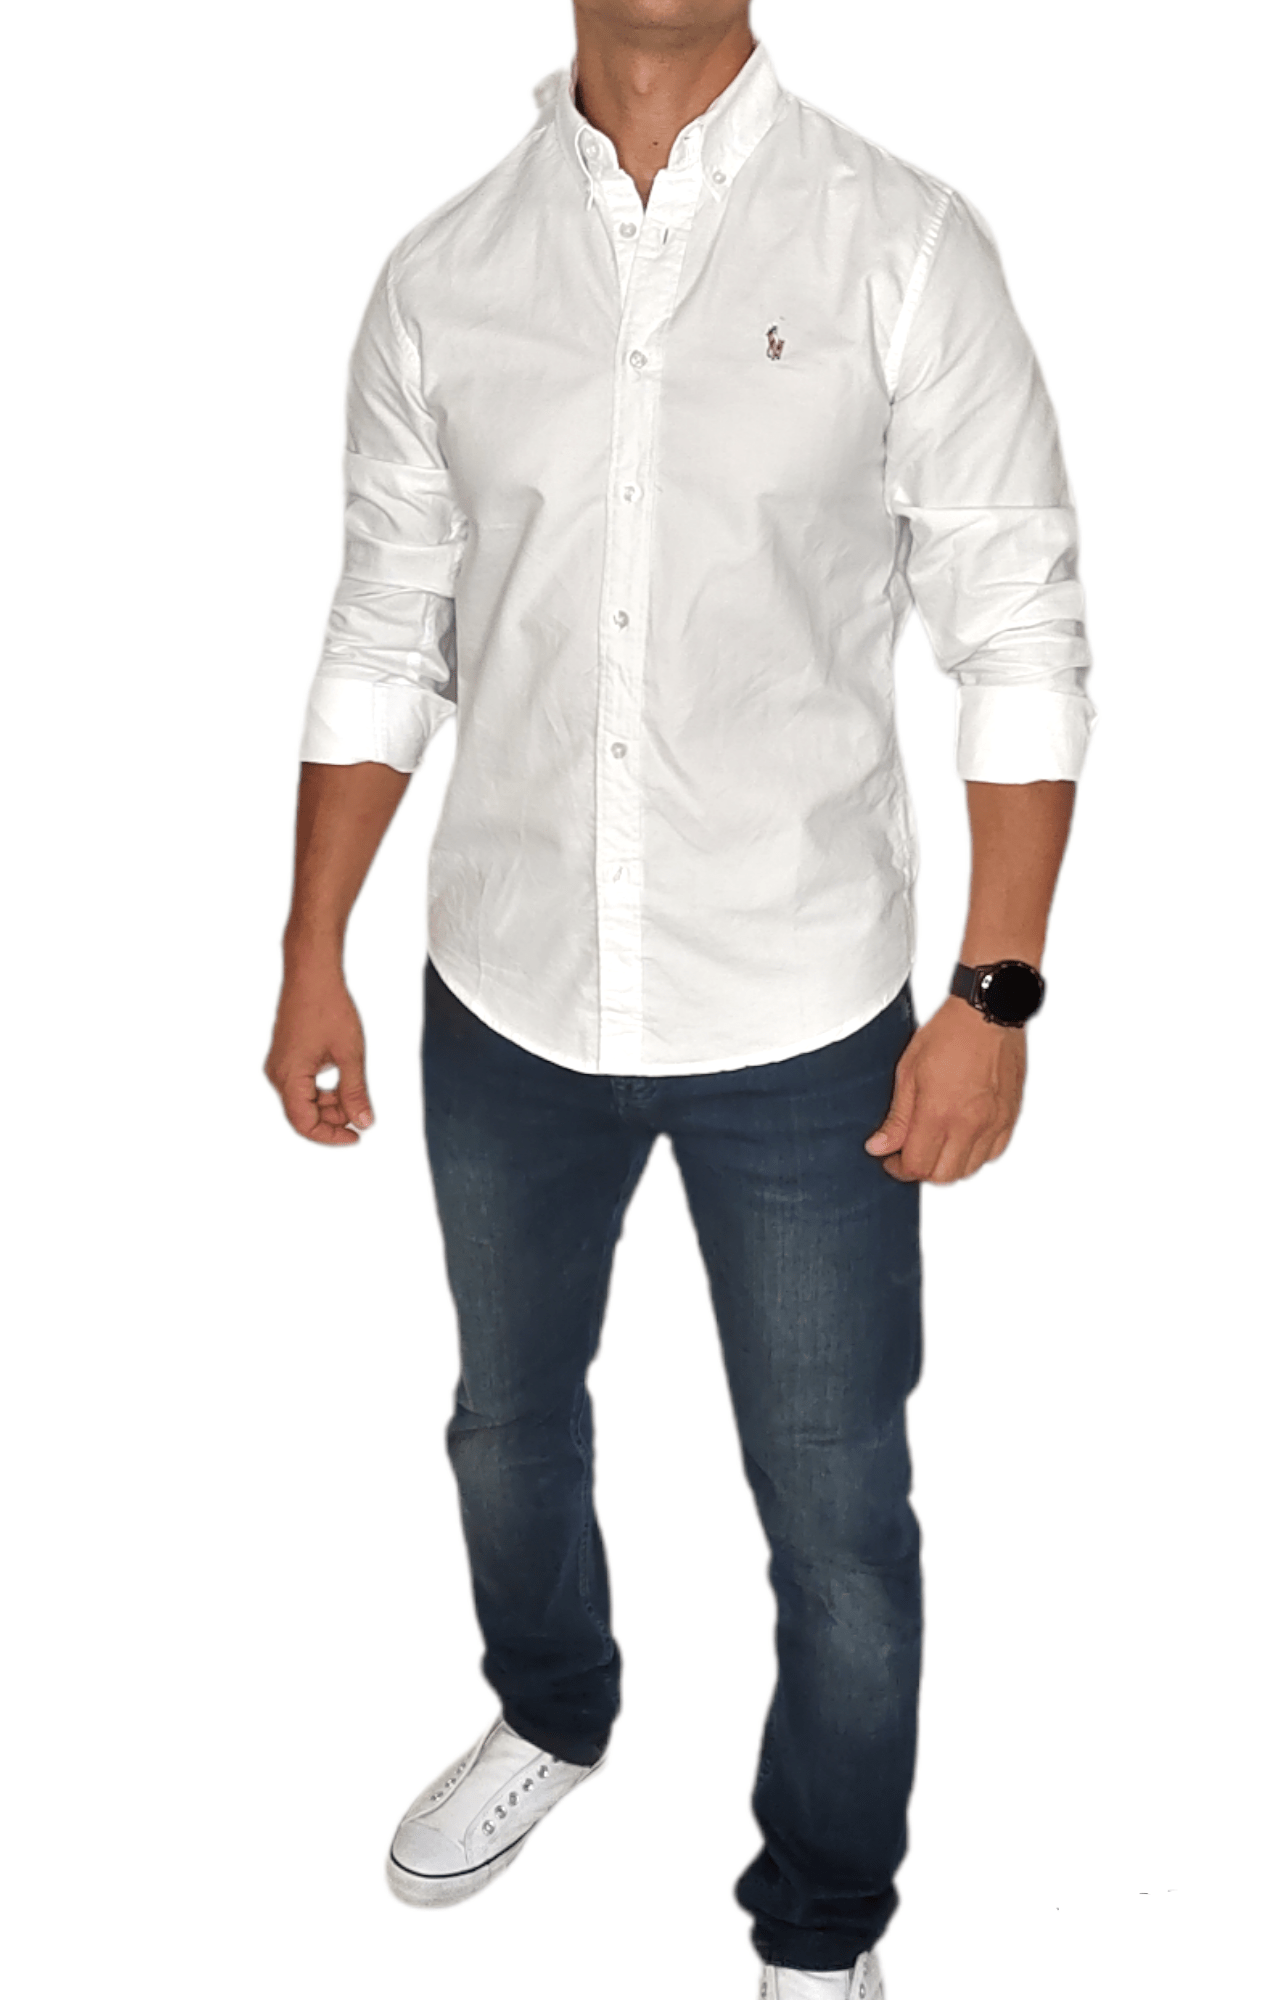 ElOutlet - Men Summer Shirts Men (local Polo) Shirt (Slim-Fit) - White